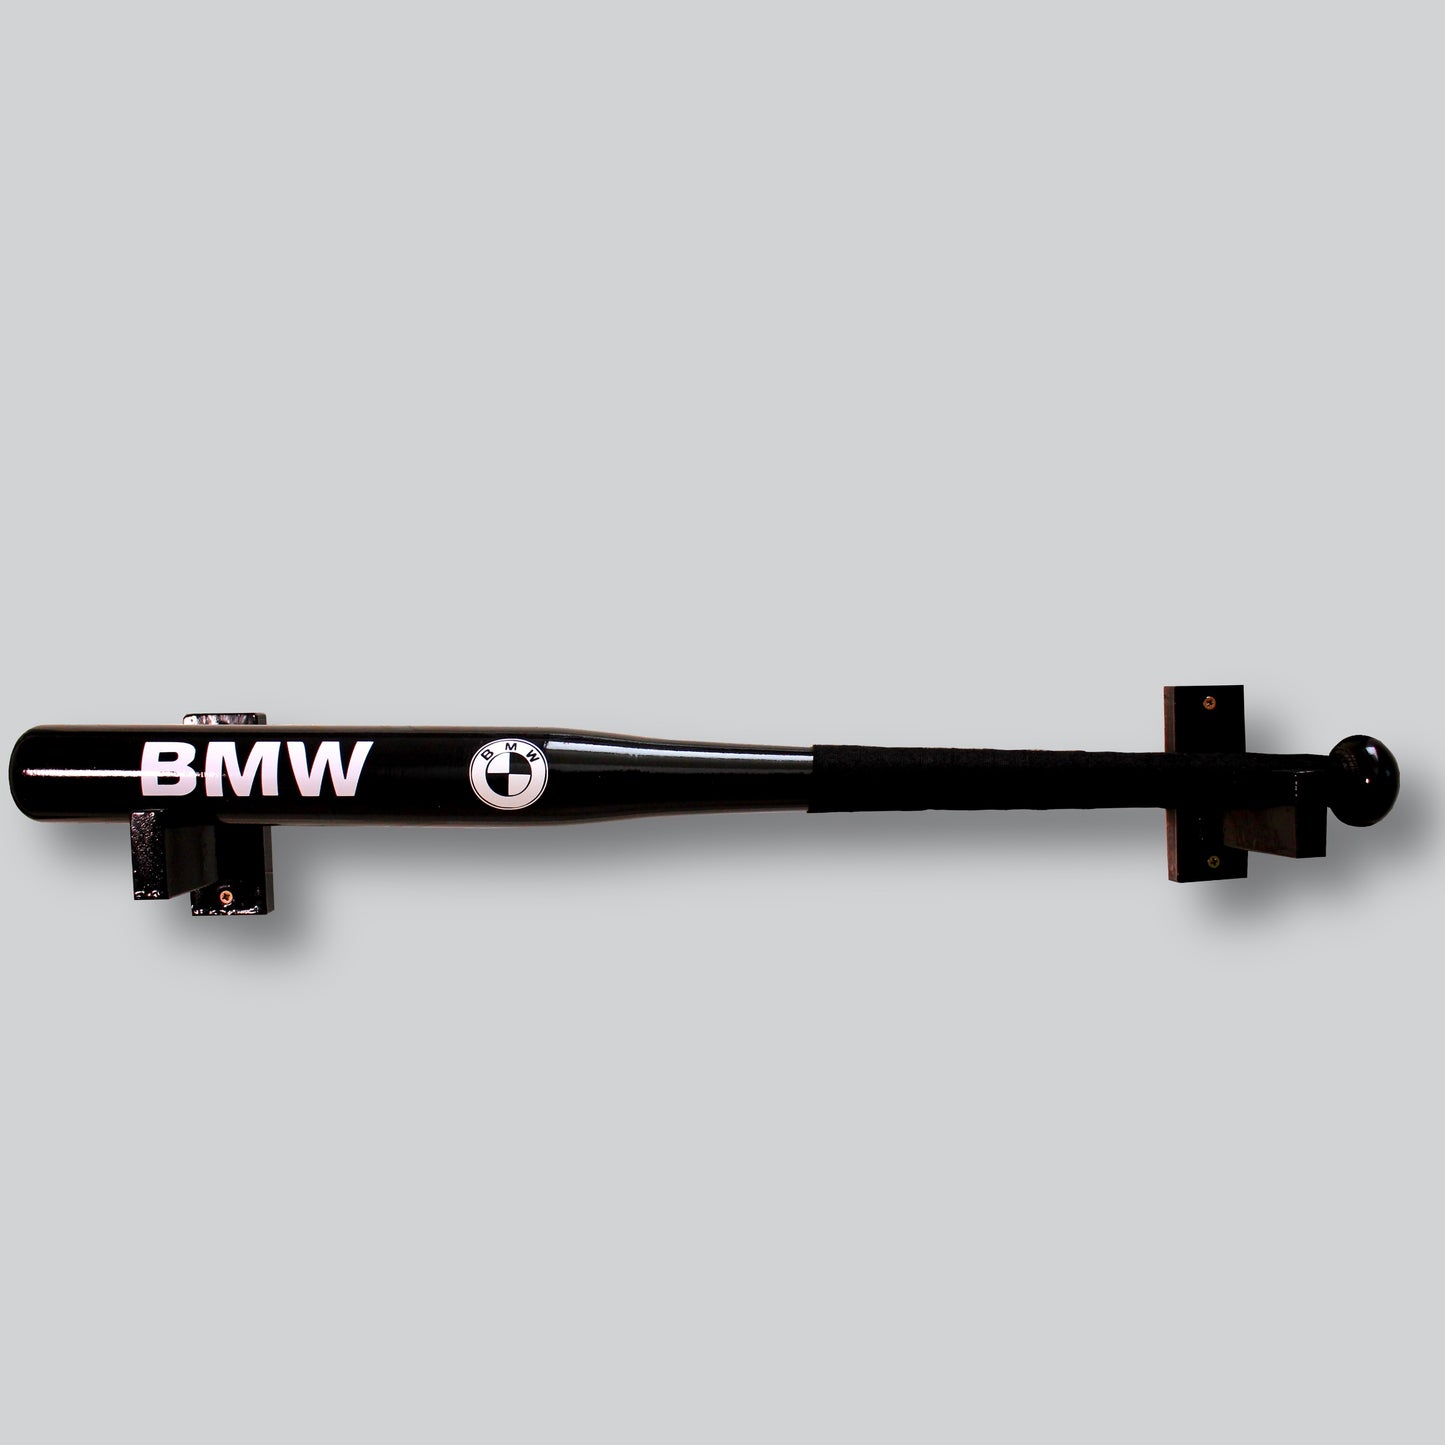 BMW baseball bat